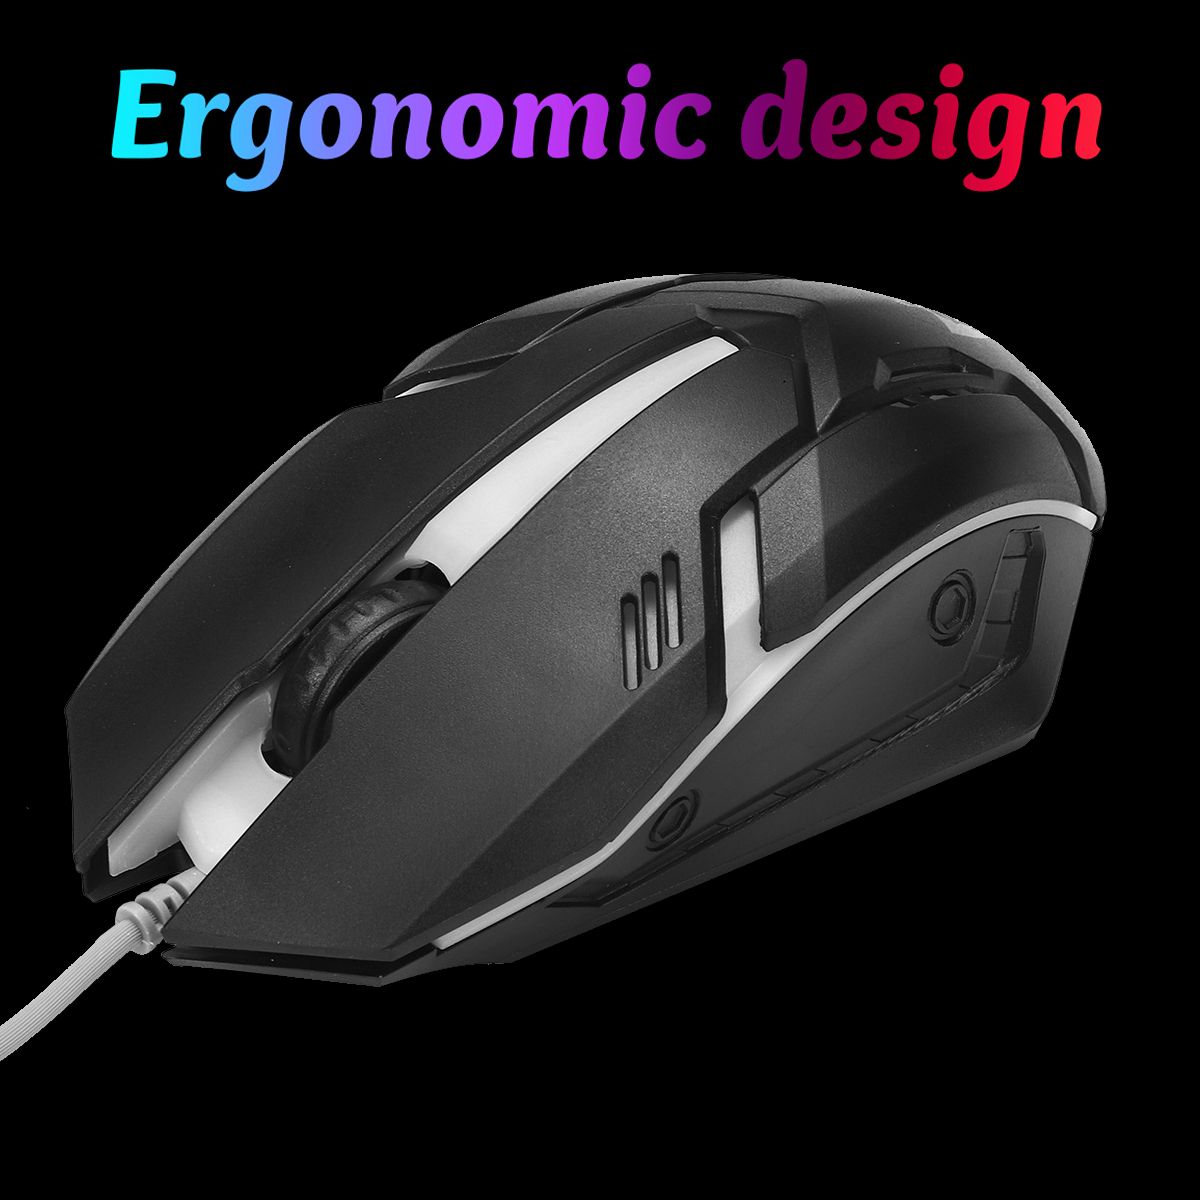 104-Keys-Wired-Mechanical-Keyboard--Mouse-Set-RGB-Backlight-Gaming-Keyboard-1000DPI-Ergonomic-Mouse-1768354